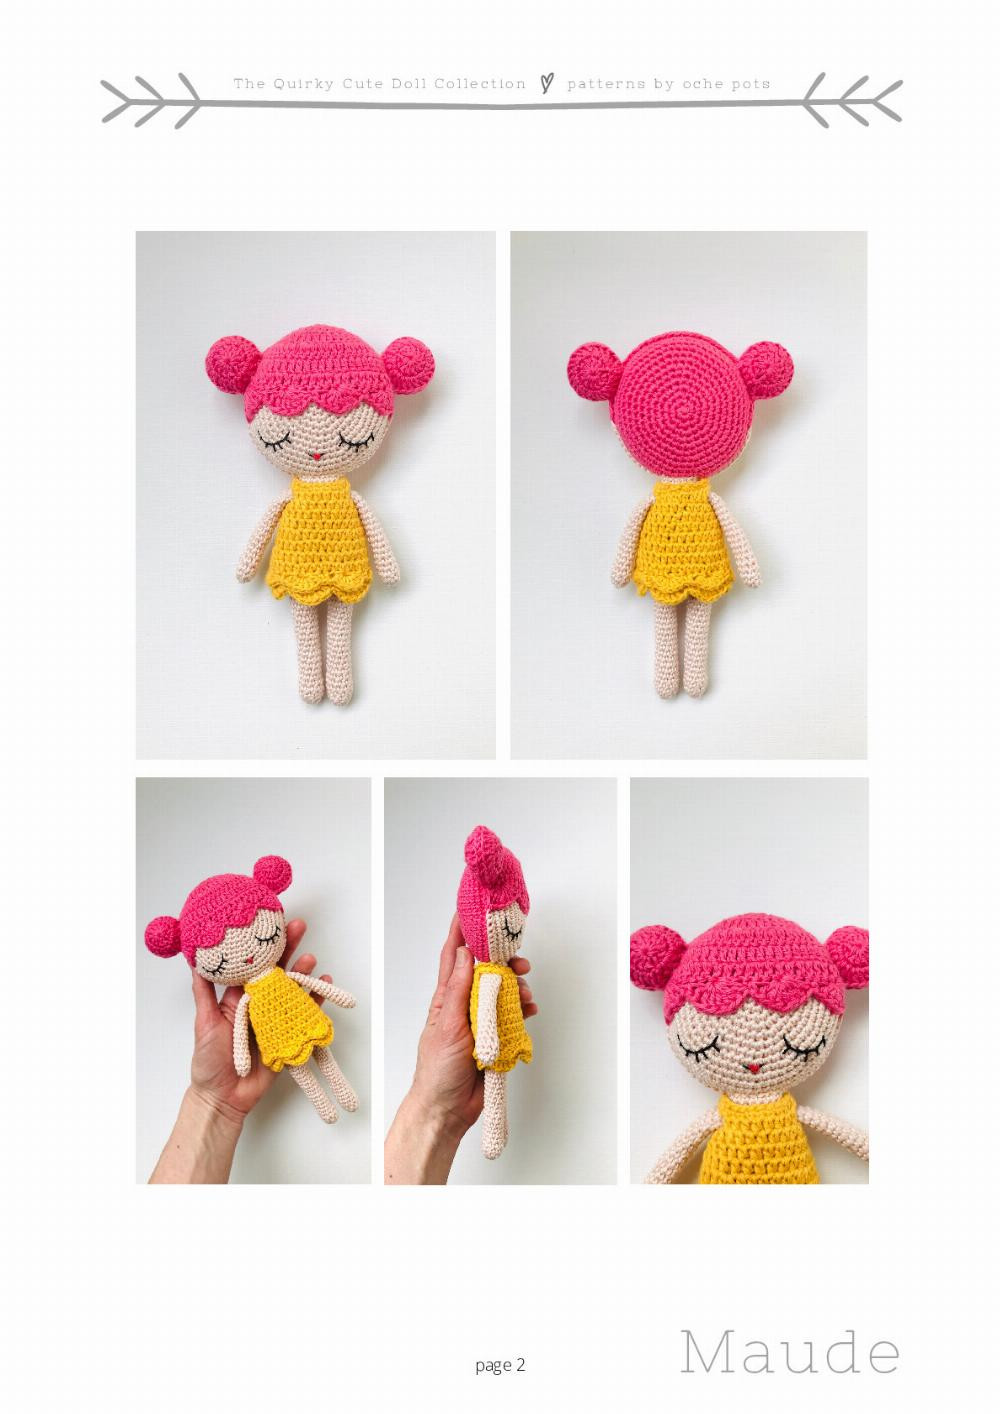 maude crochet patern doll, Crochet pattern for baby girl doll wearing yellow dress